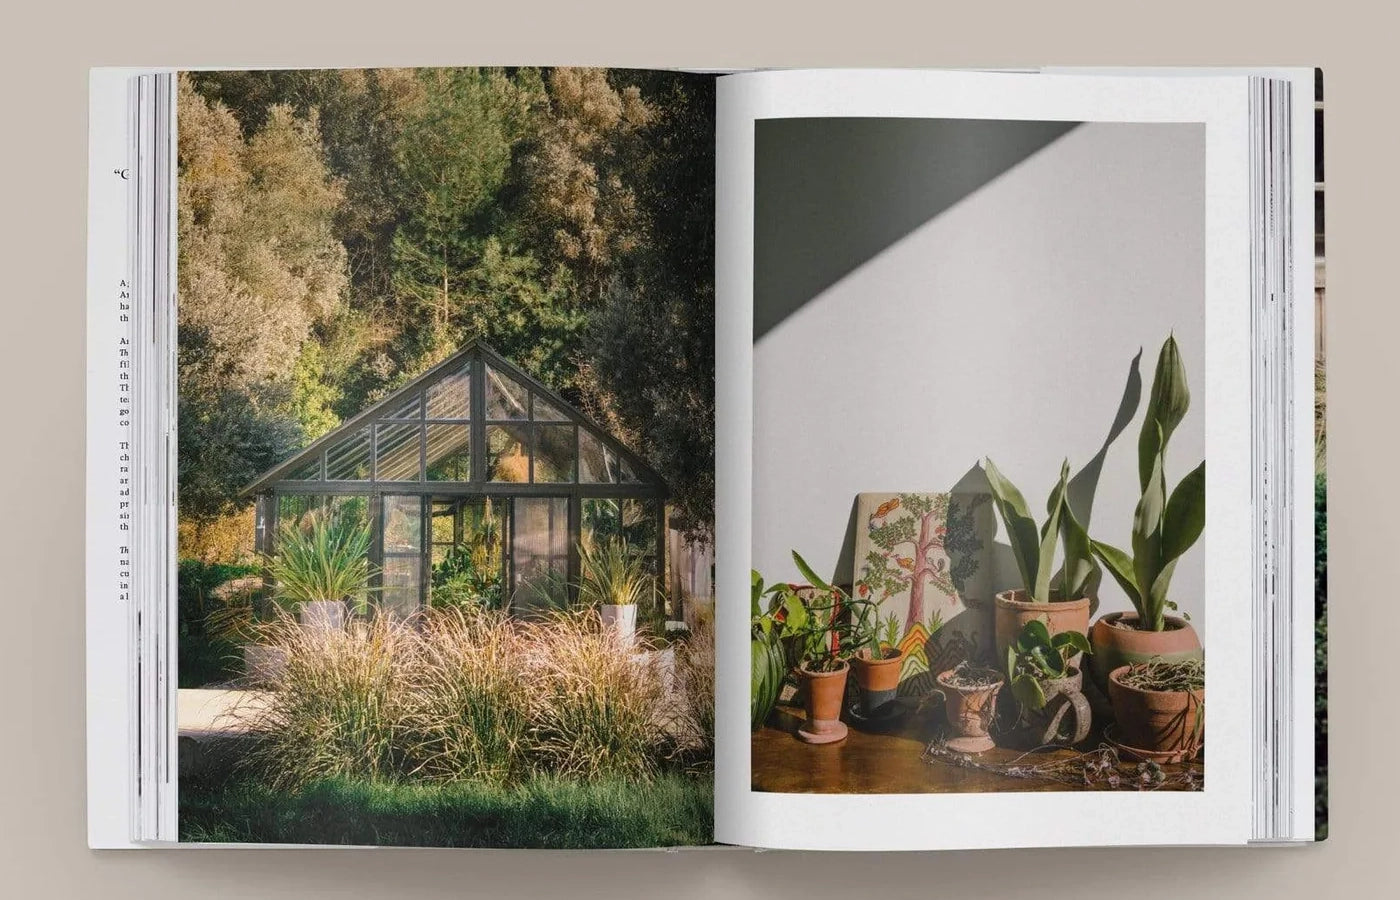 The Kinfolk Garden book